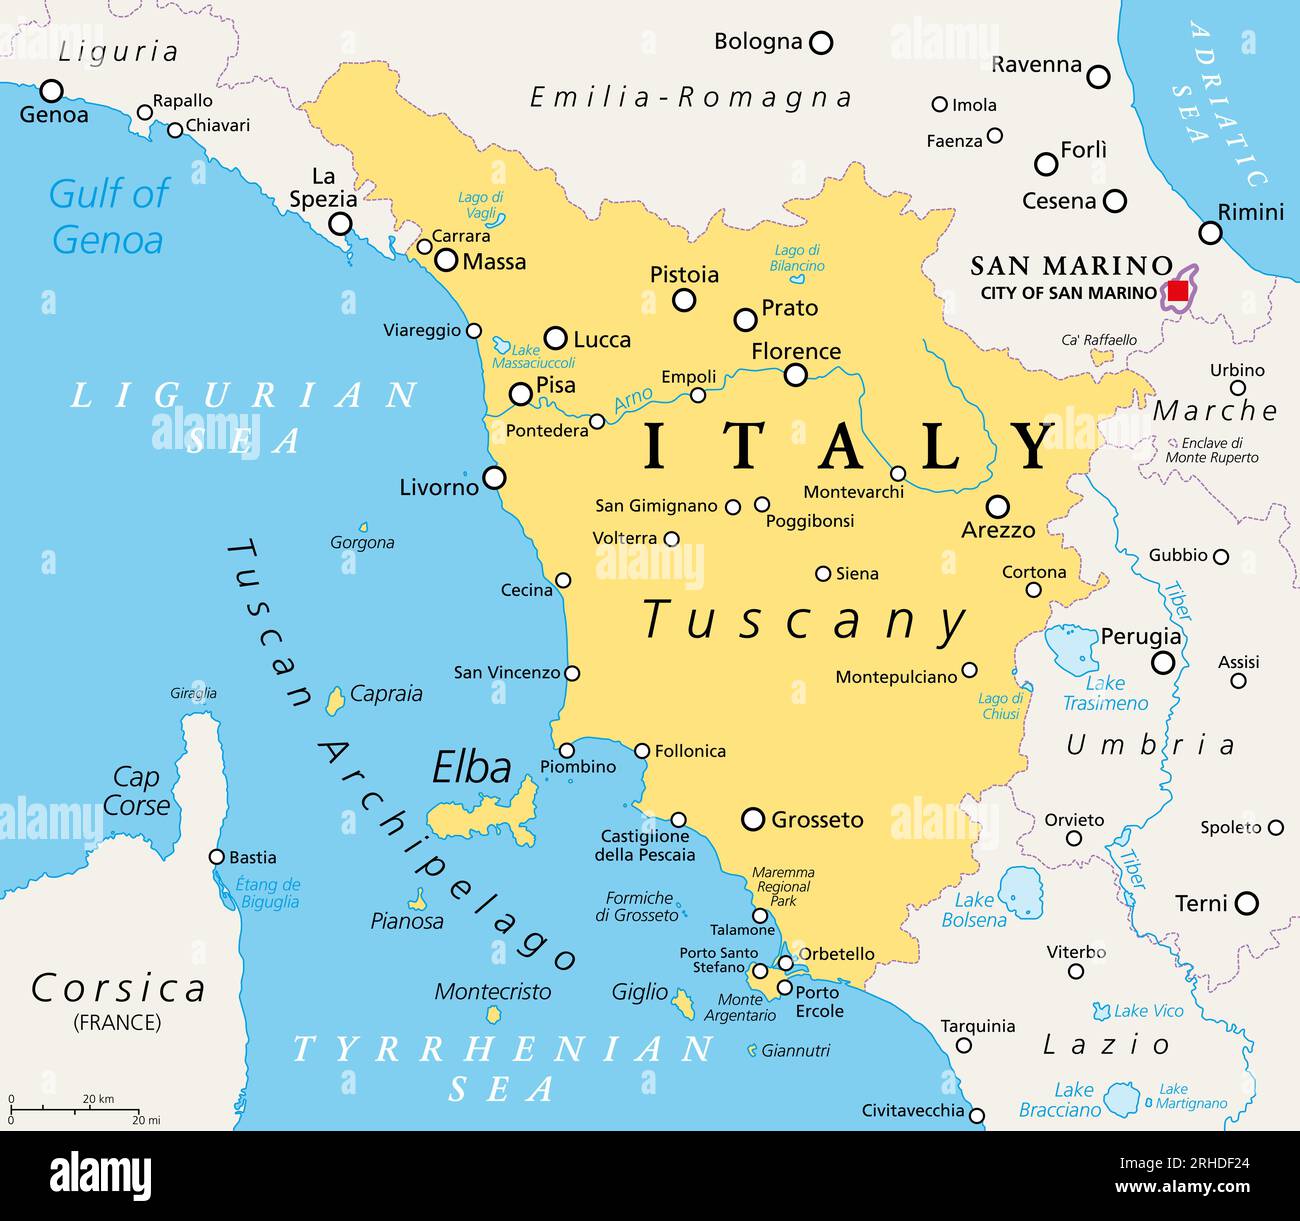 Tuscany, region in central Italy, political map with many popular tourist spots like Florence, Castiglione della Pescaia, Pisa, Grosseto and Siena. Stock Photo